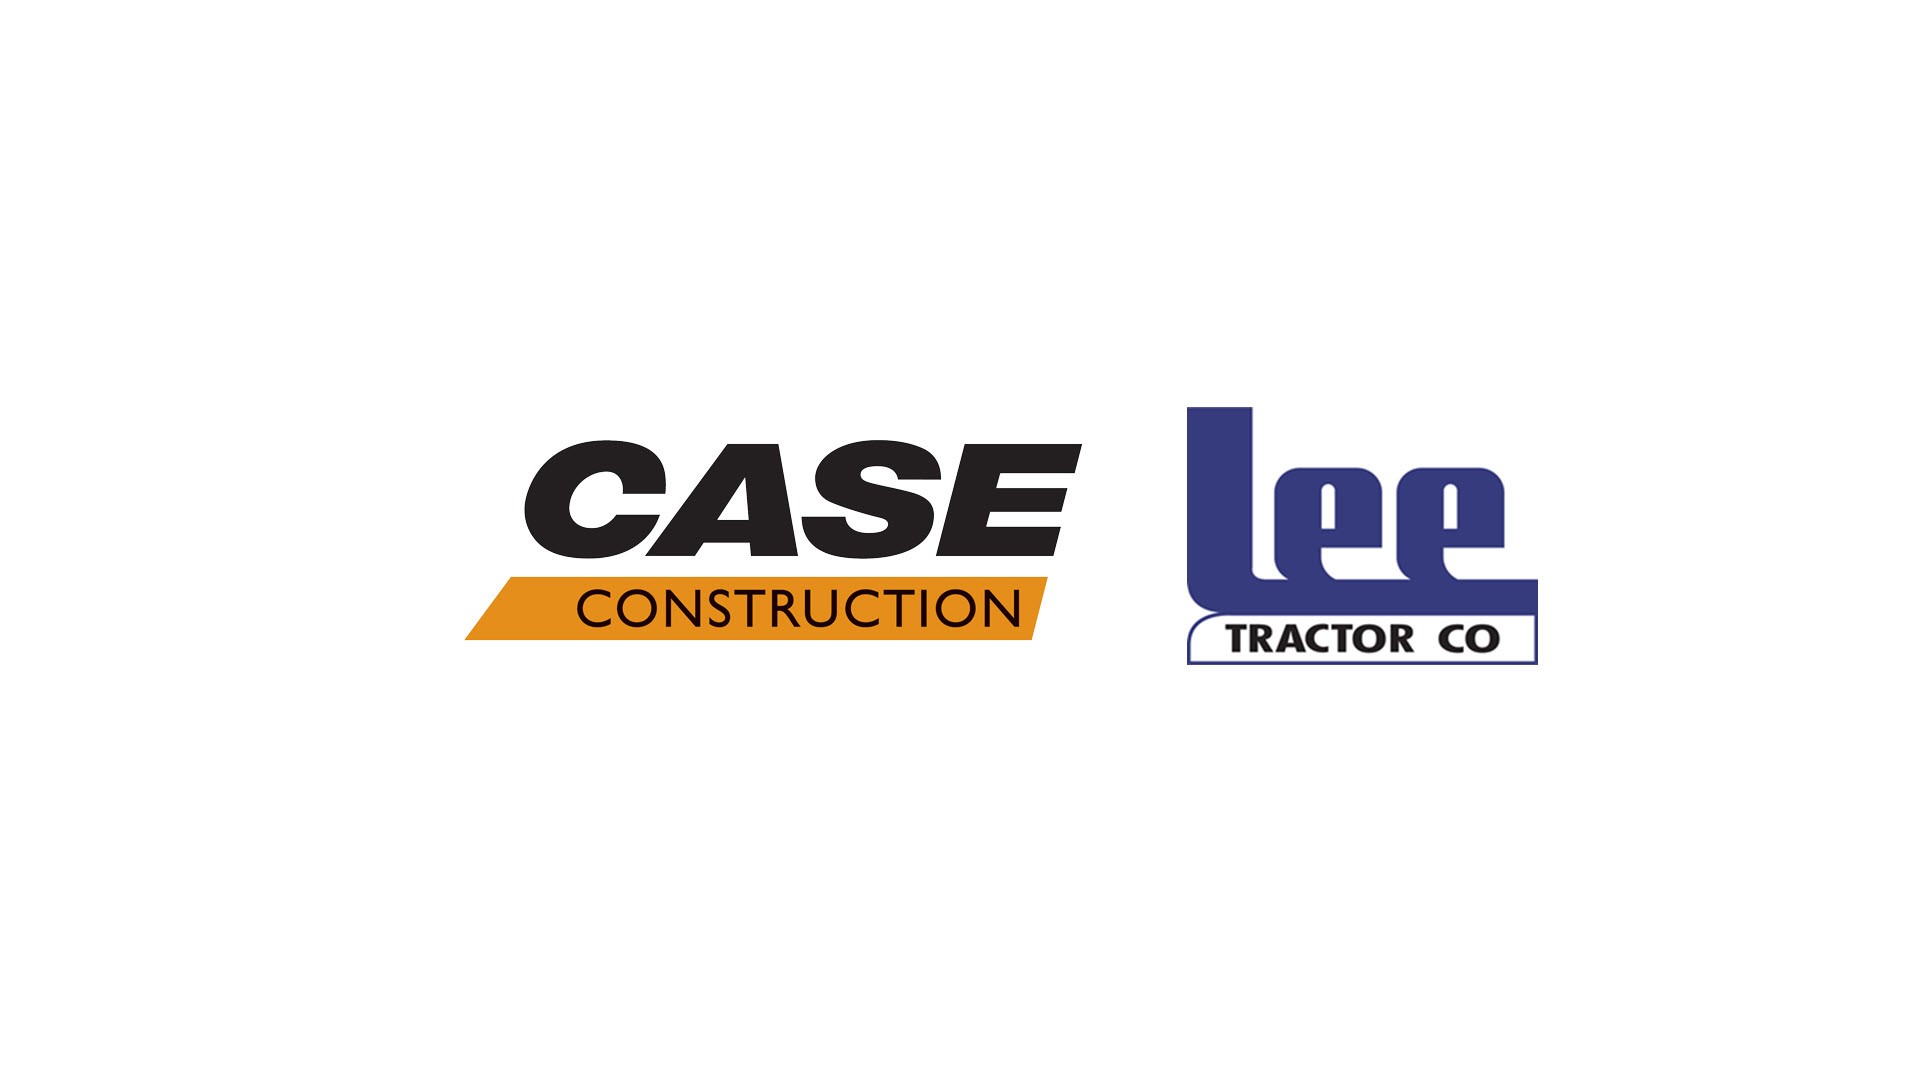 CASE Construction Equipment Lee Tractor Logos